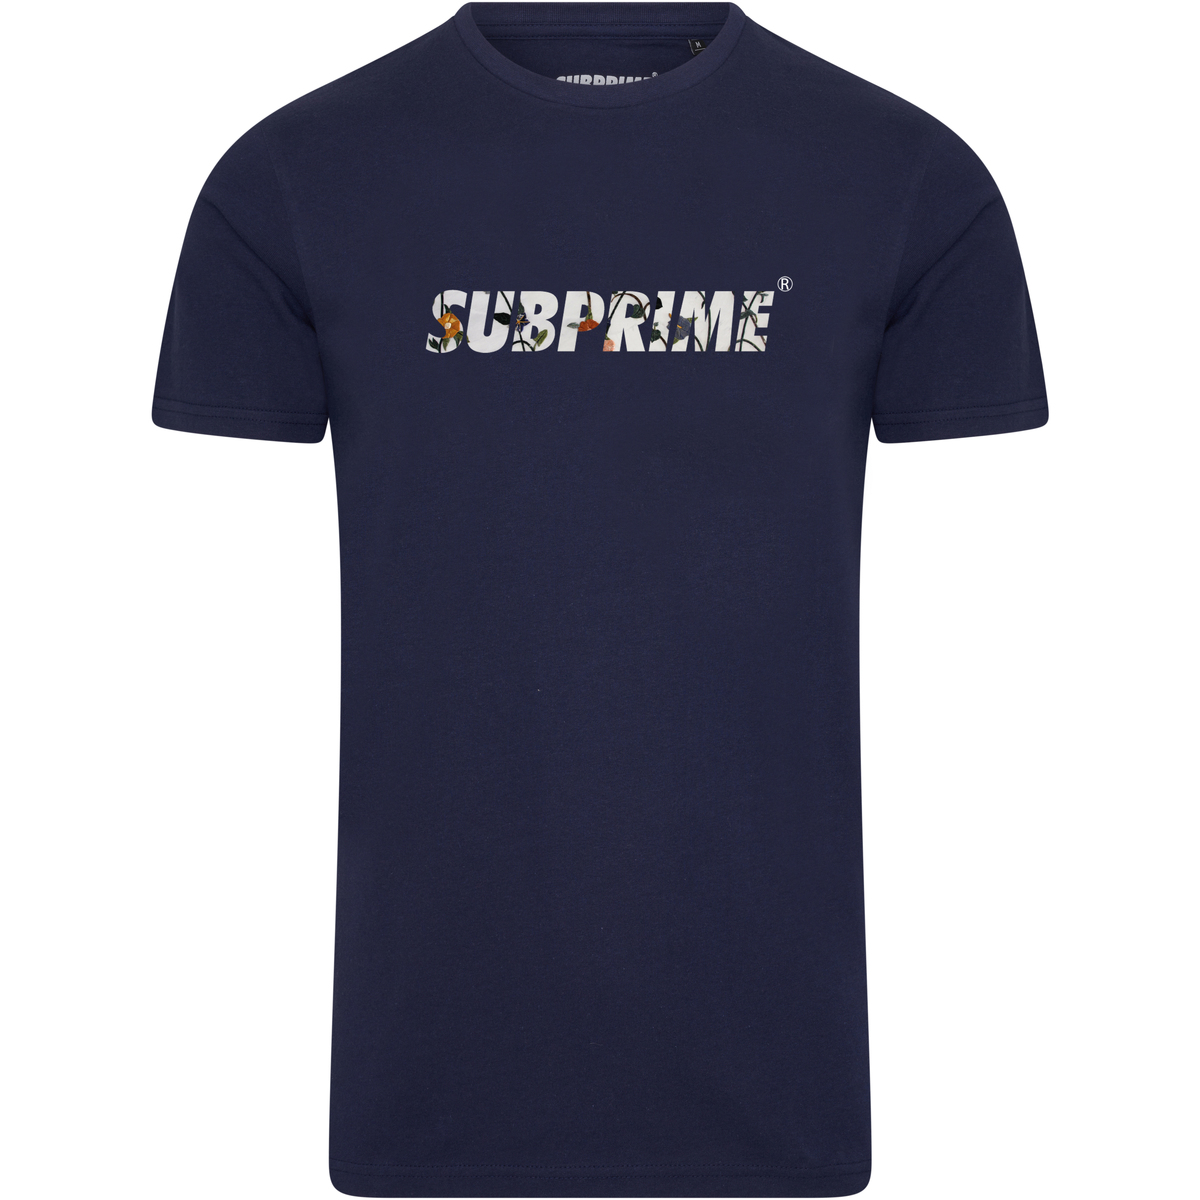 Abbigliamento T-shirt maniche corte Subprime Shirt Flower Navy Blu